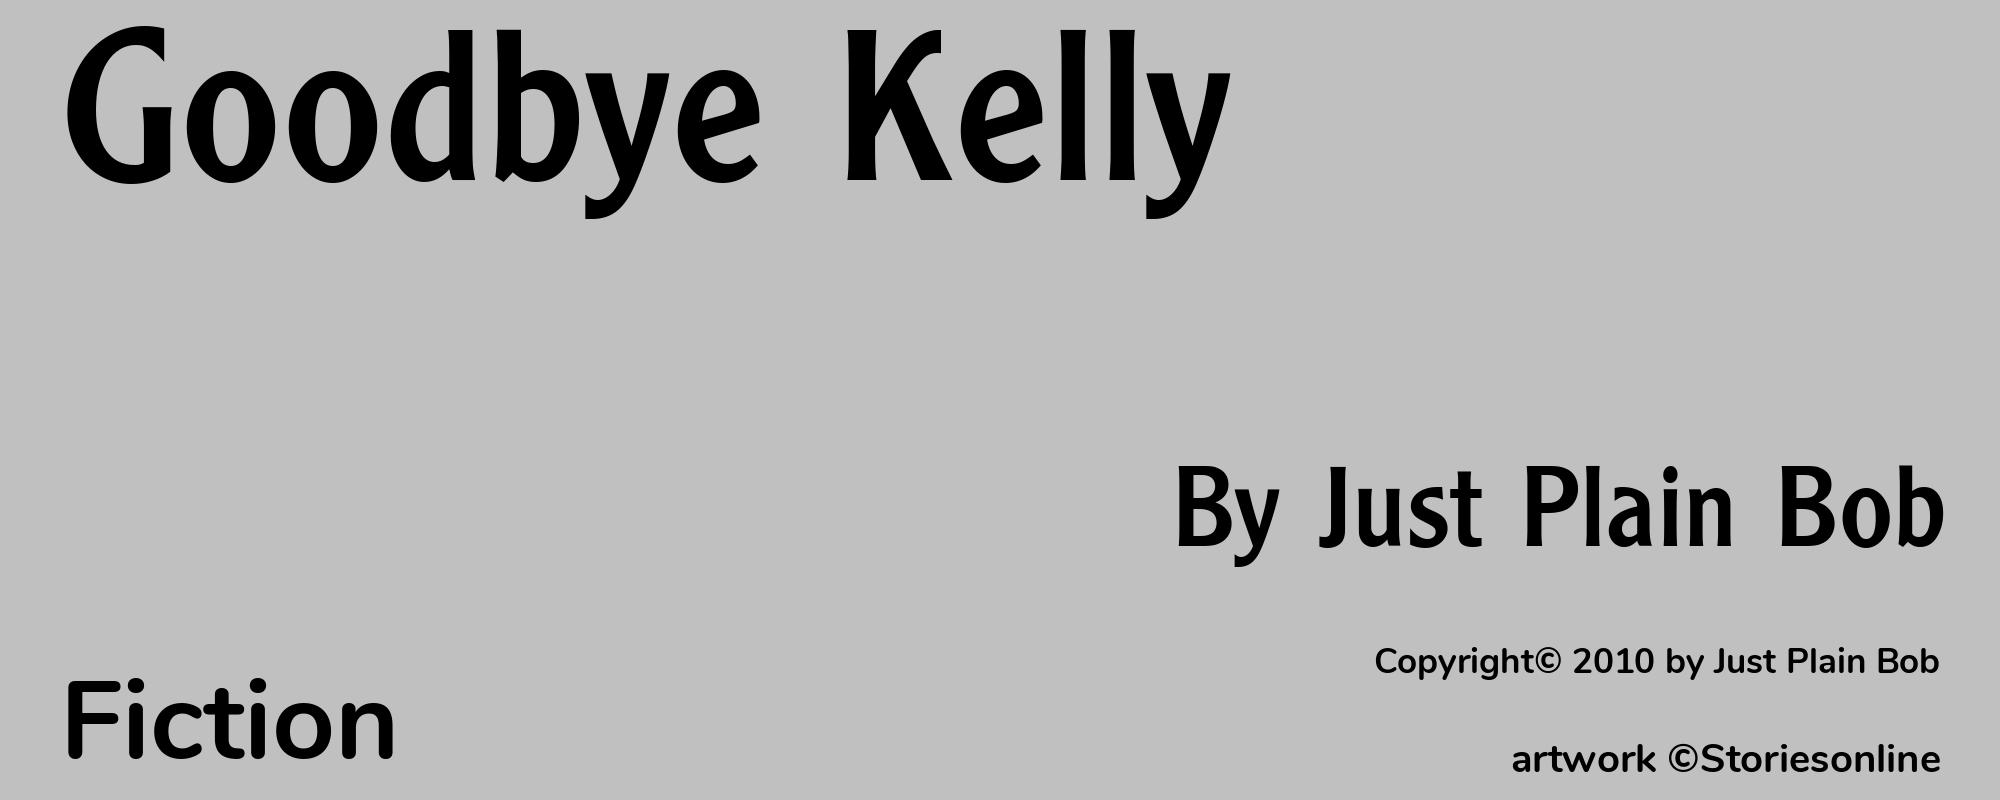 Goodbye Kelly - Cover